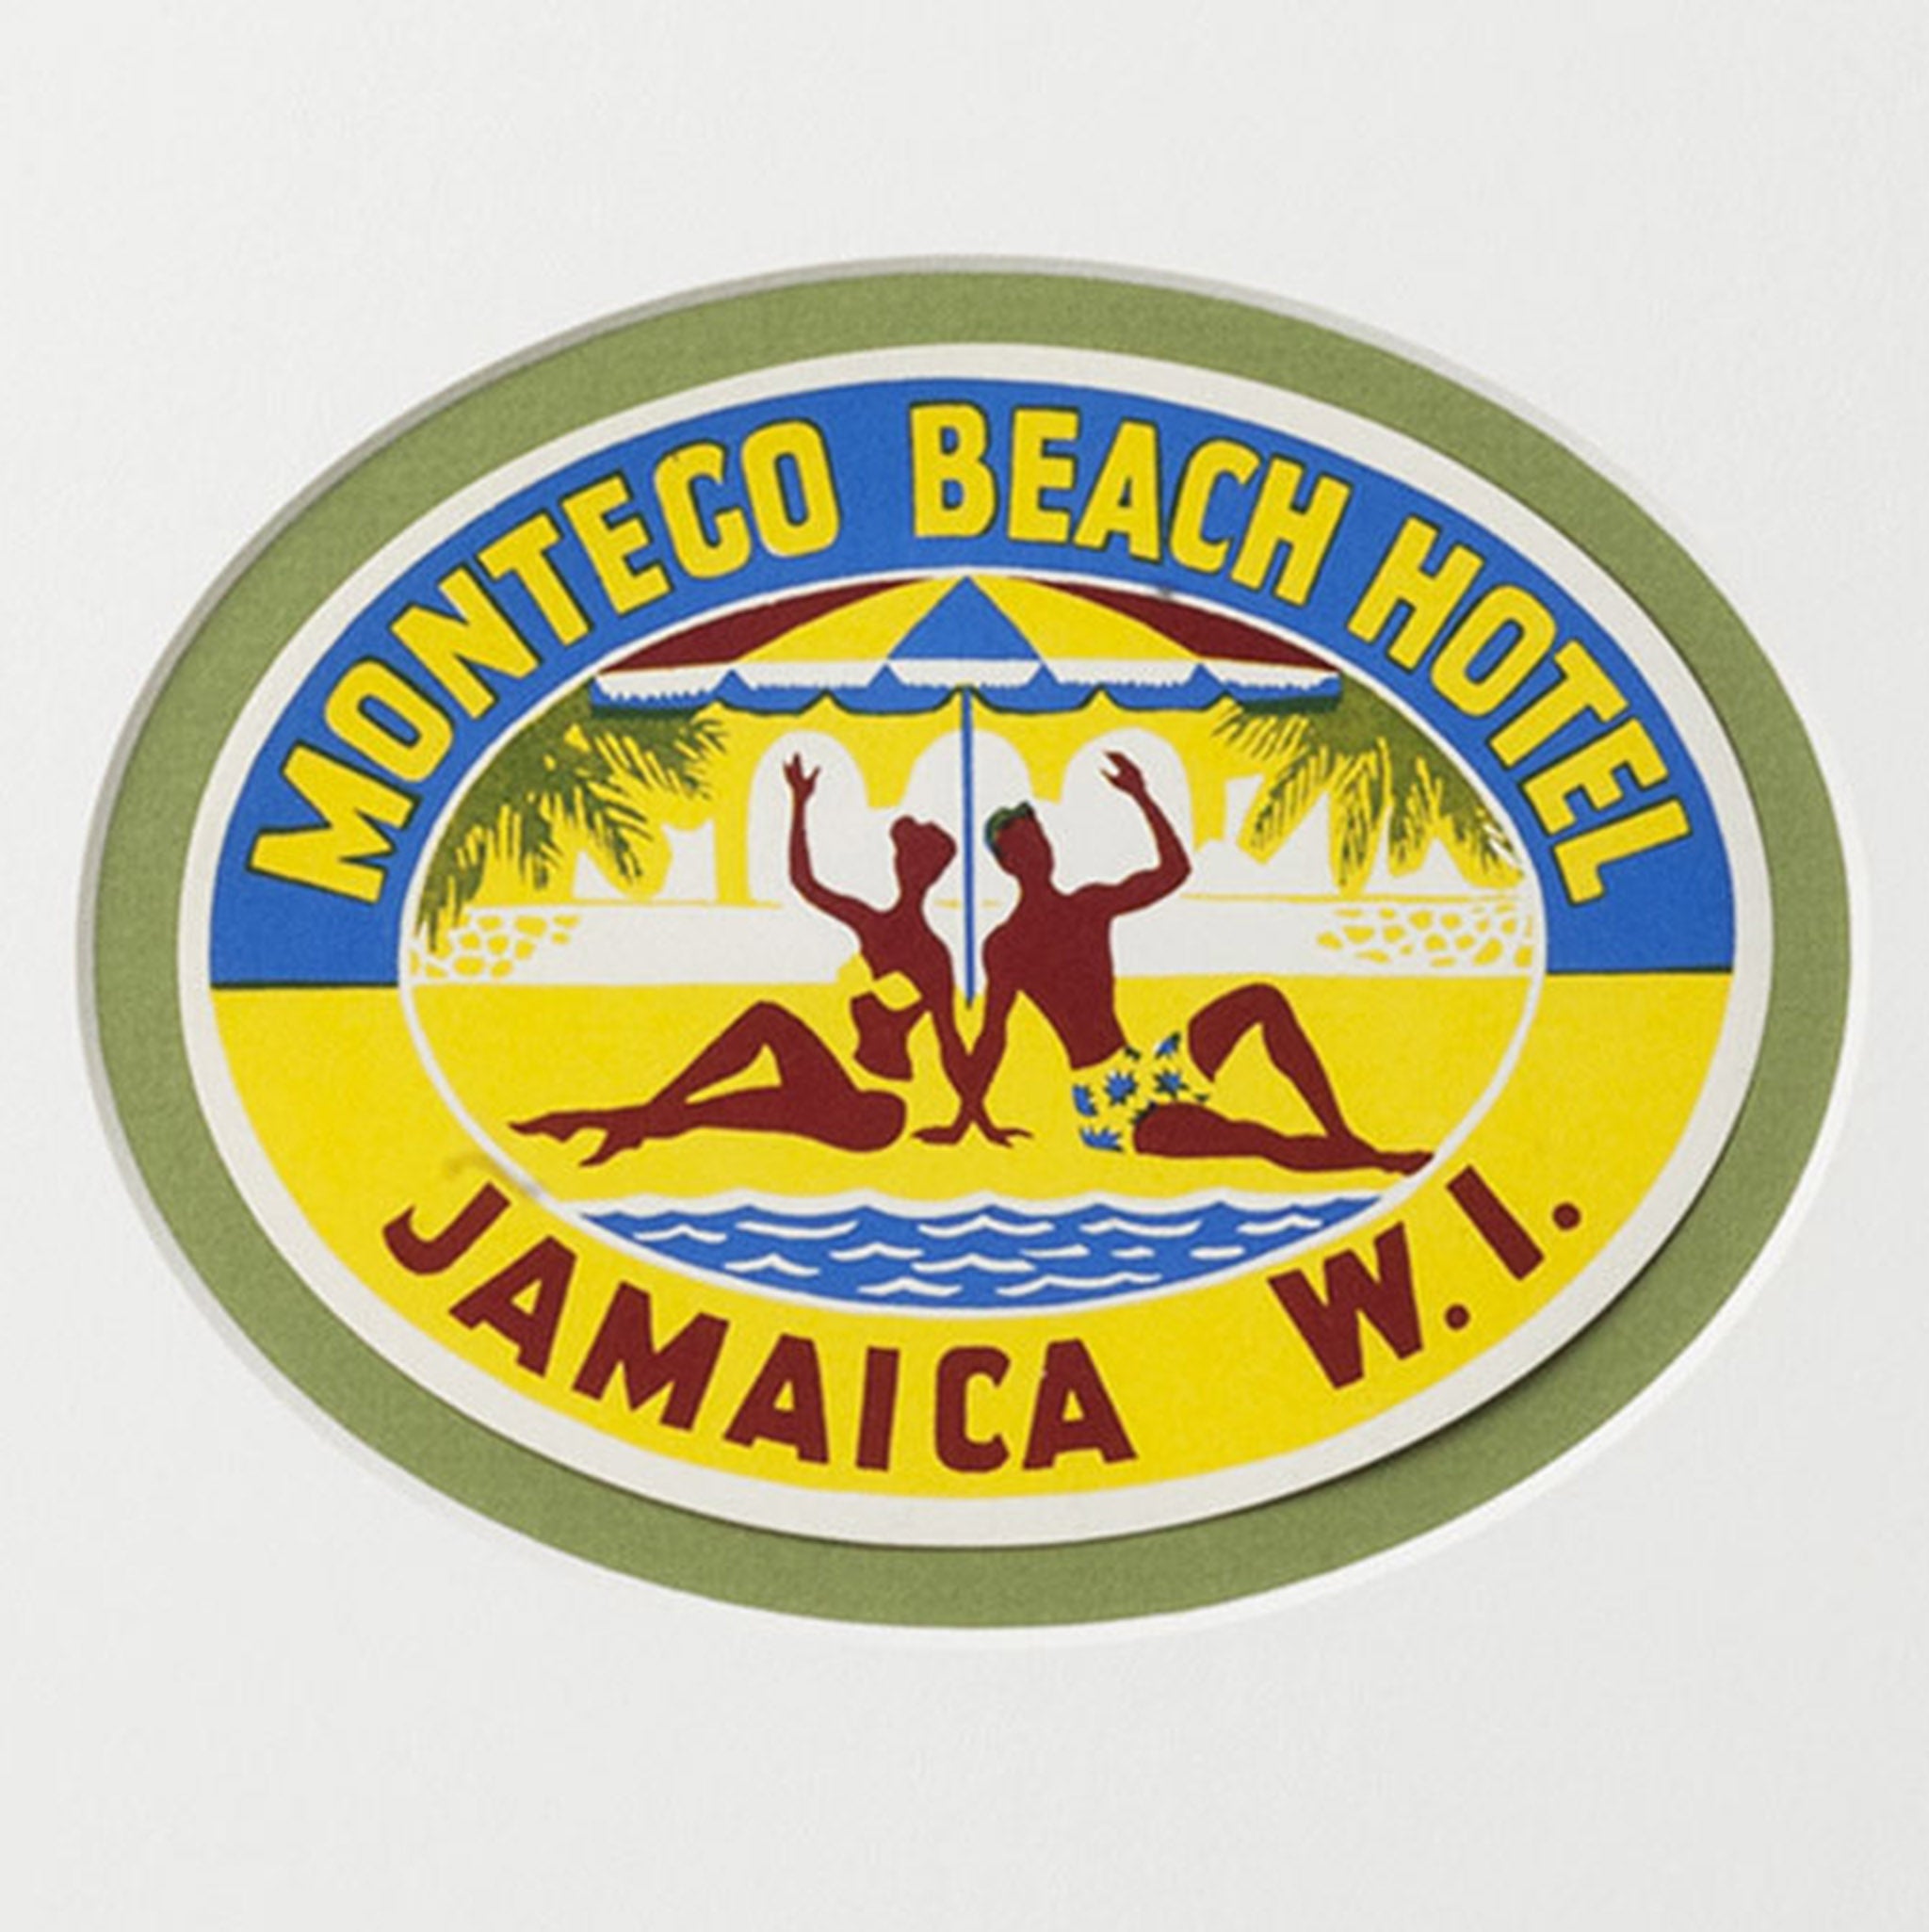 Montego Beach Hotel Jamaica Luggage Label